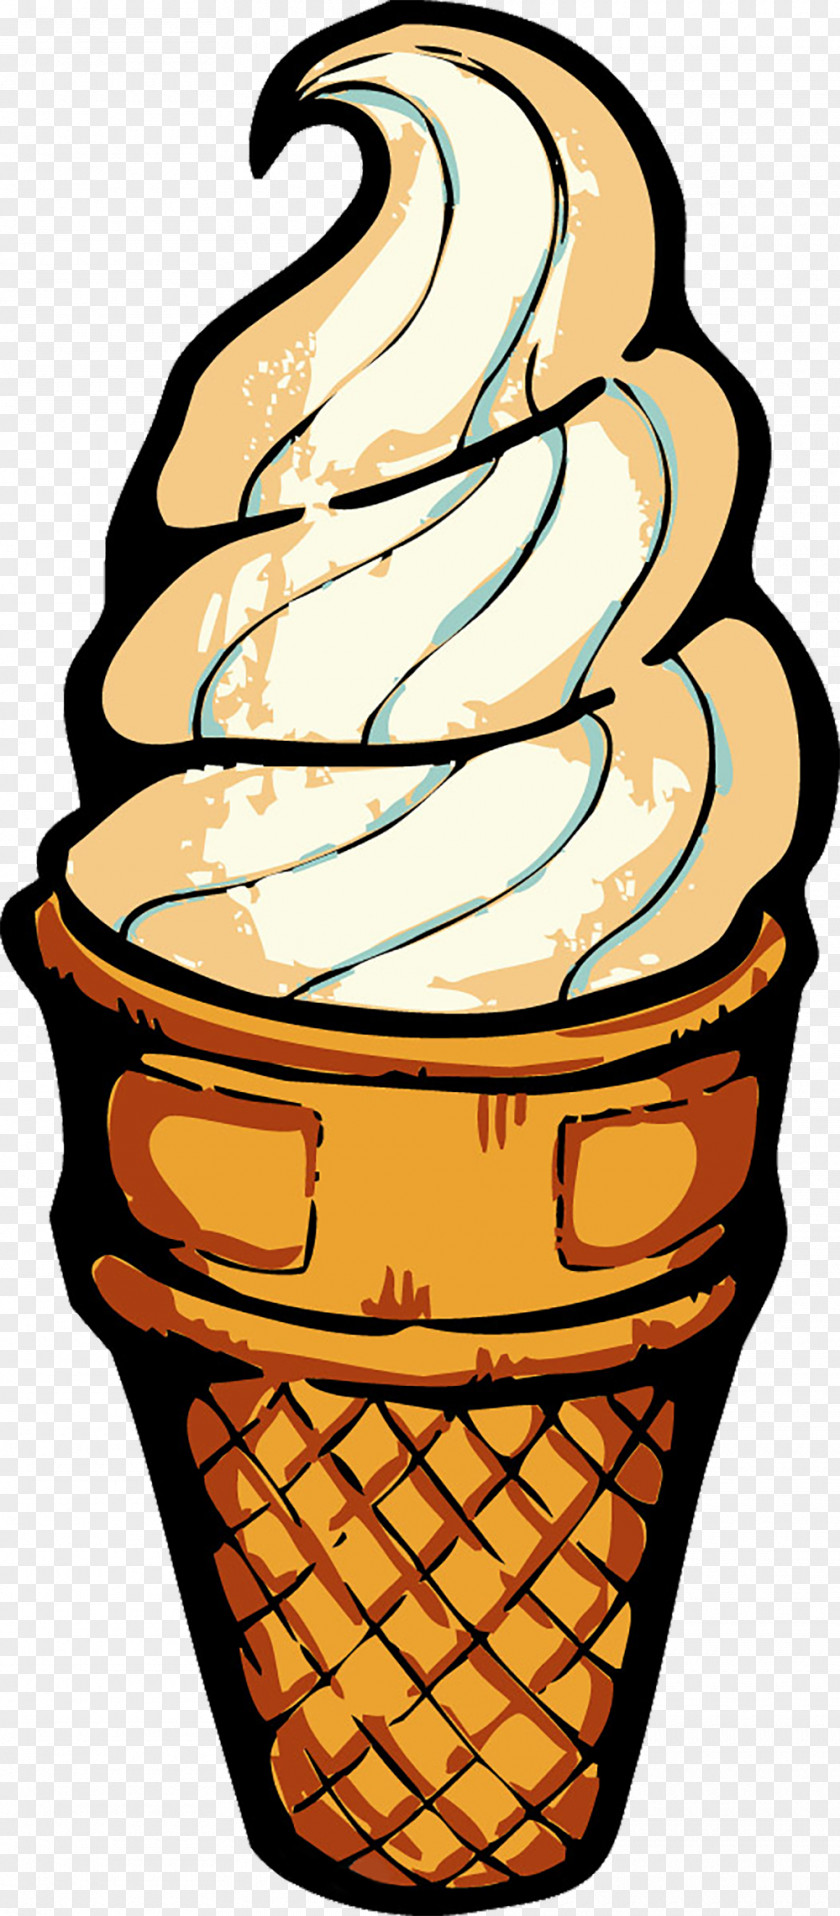 Cartoon Ice Cream Cone Illustration PNG